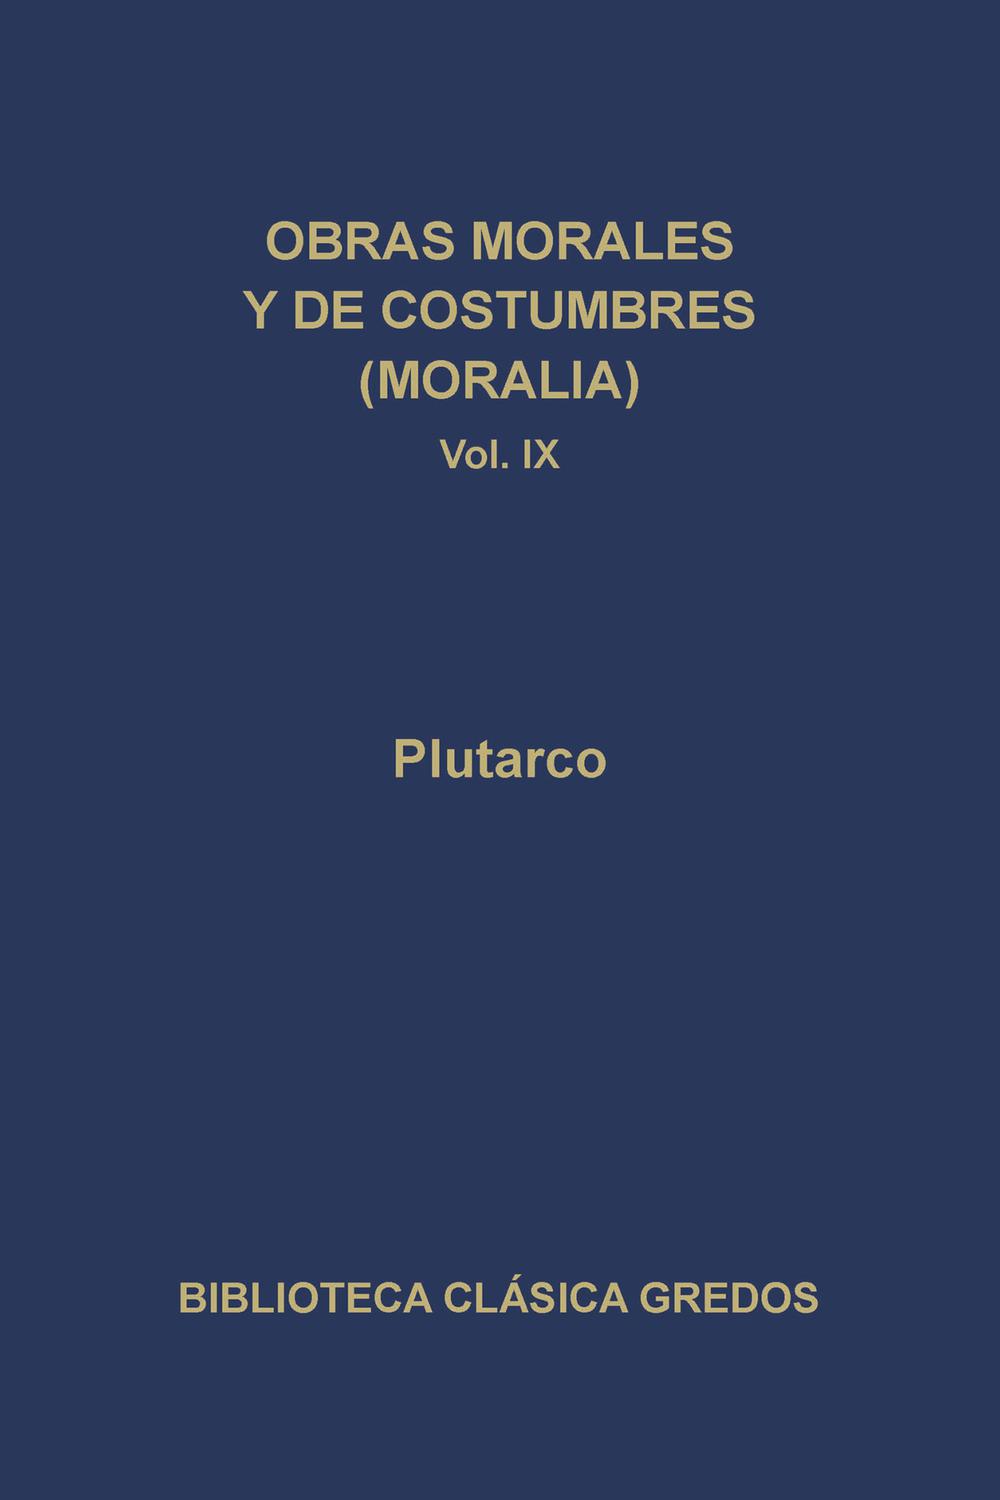 Obras morales y de costumbres (Moralia) IX - Plutarco,Vicente Ram?n Palerm, Jorge Bergua Cavero,